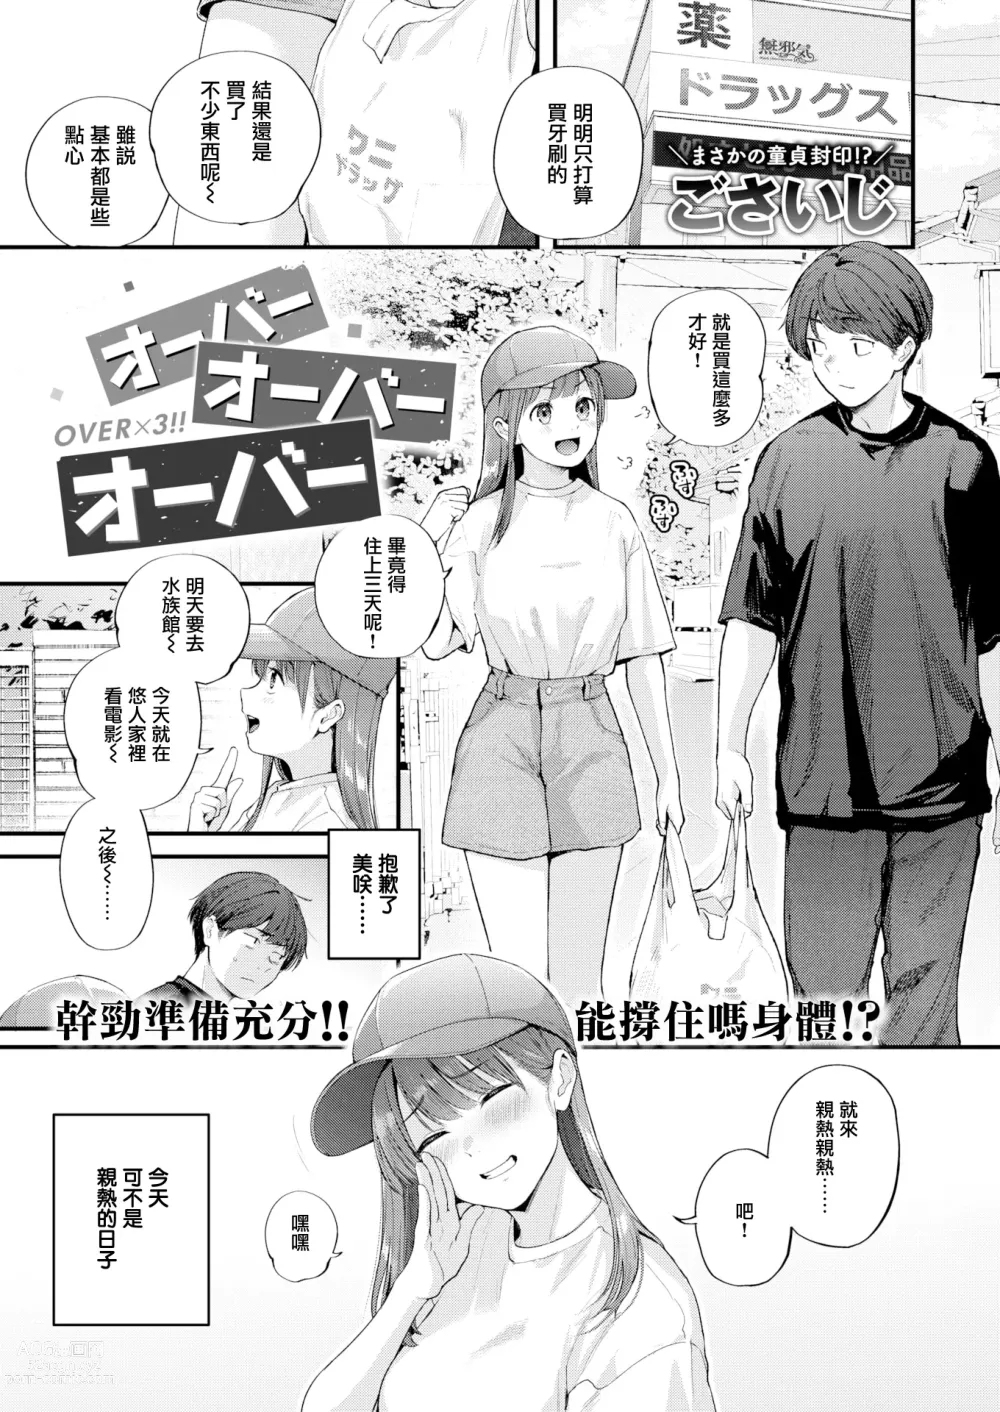 Page 3 of manga OVER x 3!!